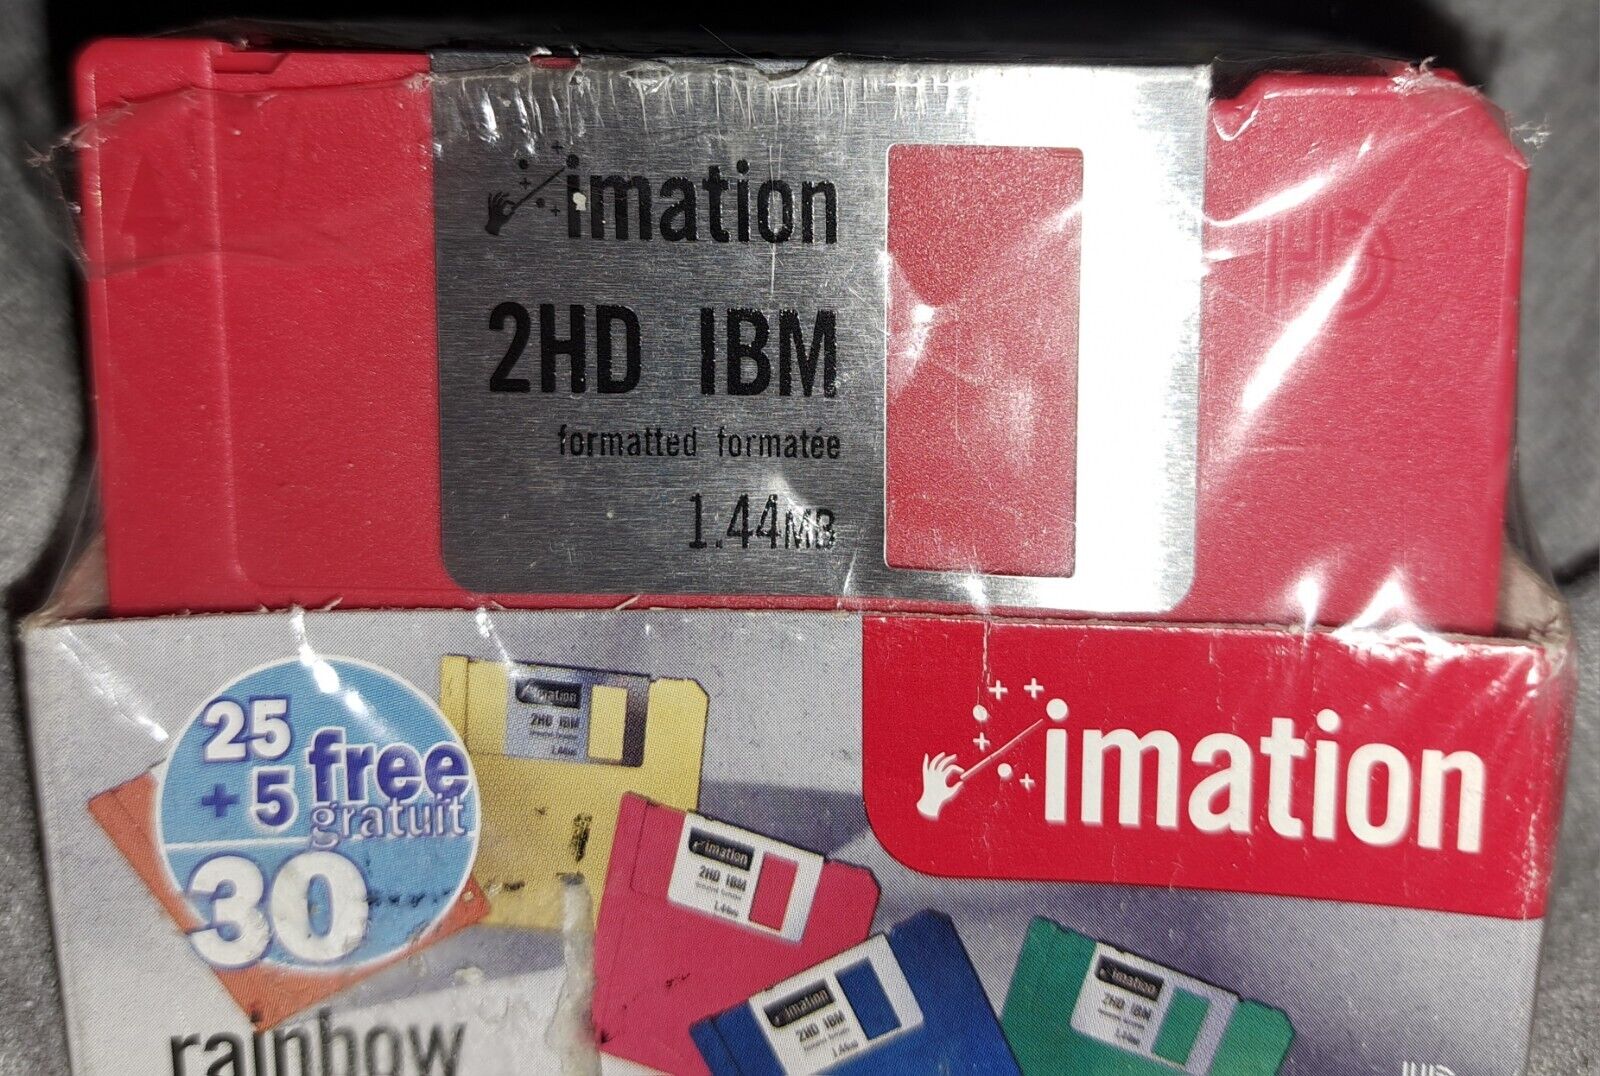 IBM Imation 2HD IBM 25 + 5 Free Total 30 Colored Diskettes 1.44 MB Brand New